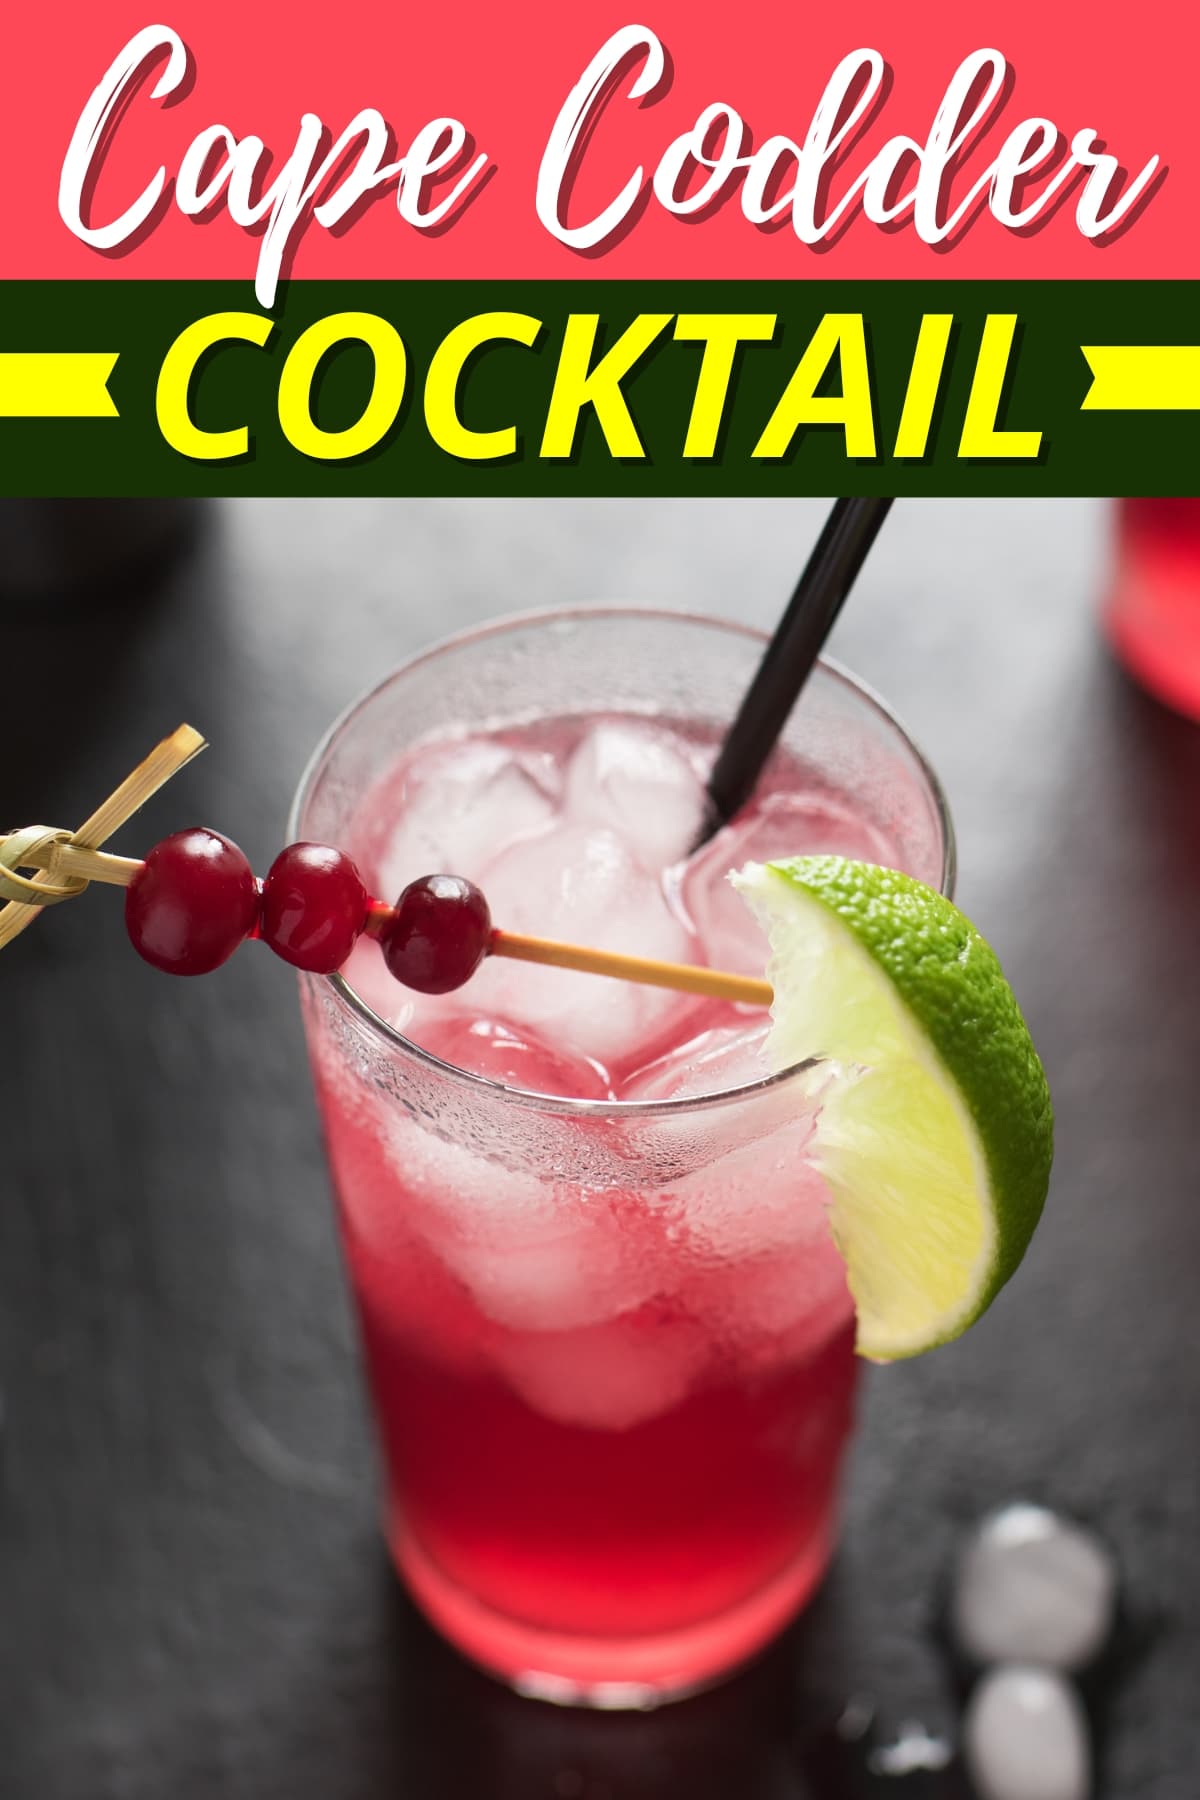 Cape Codder Cocktail